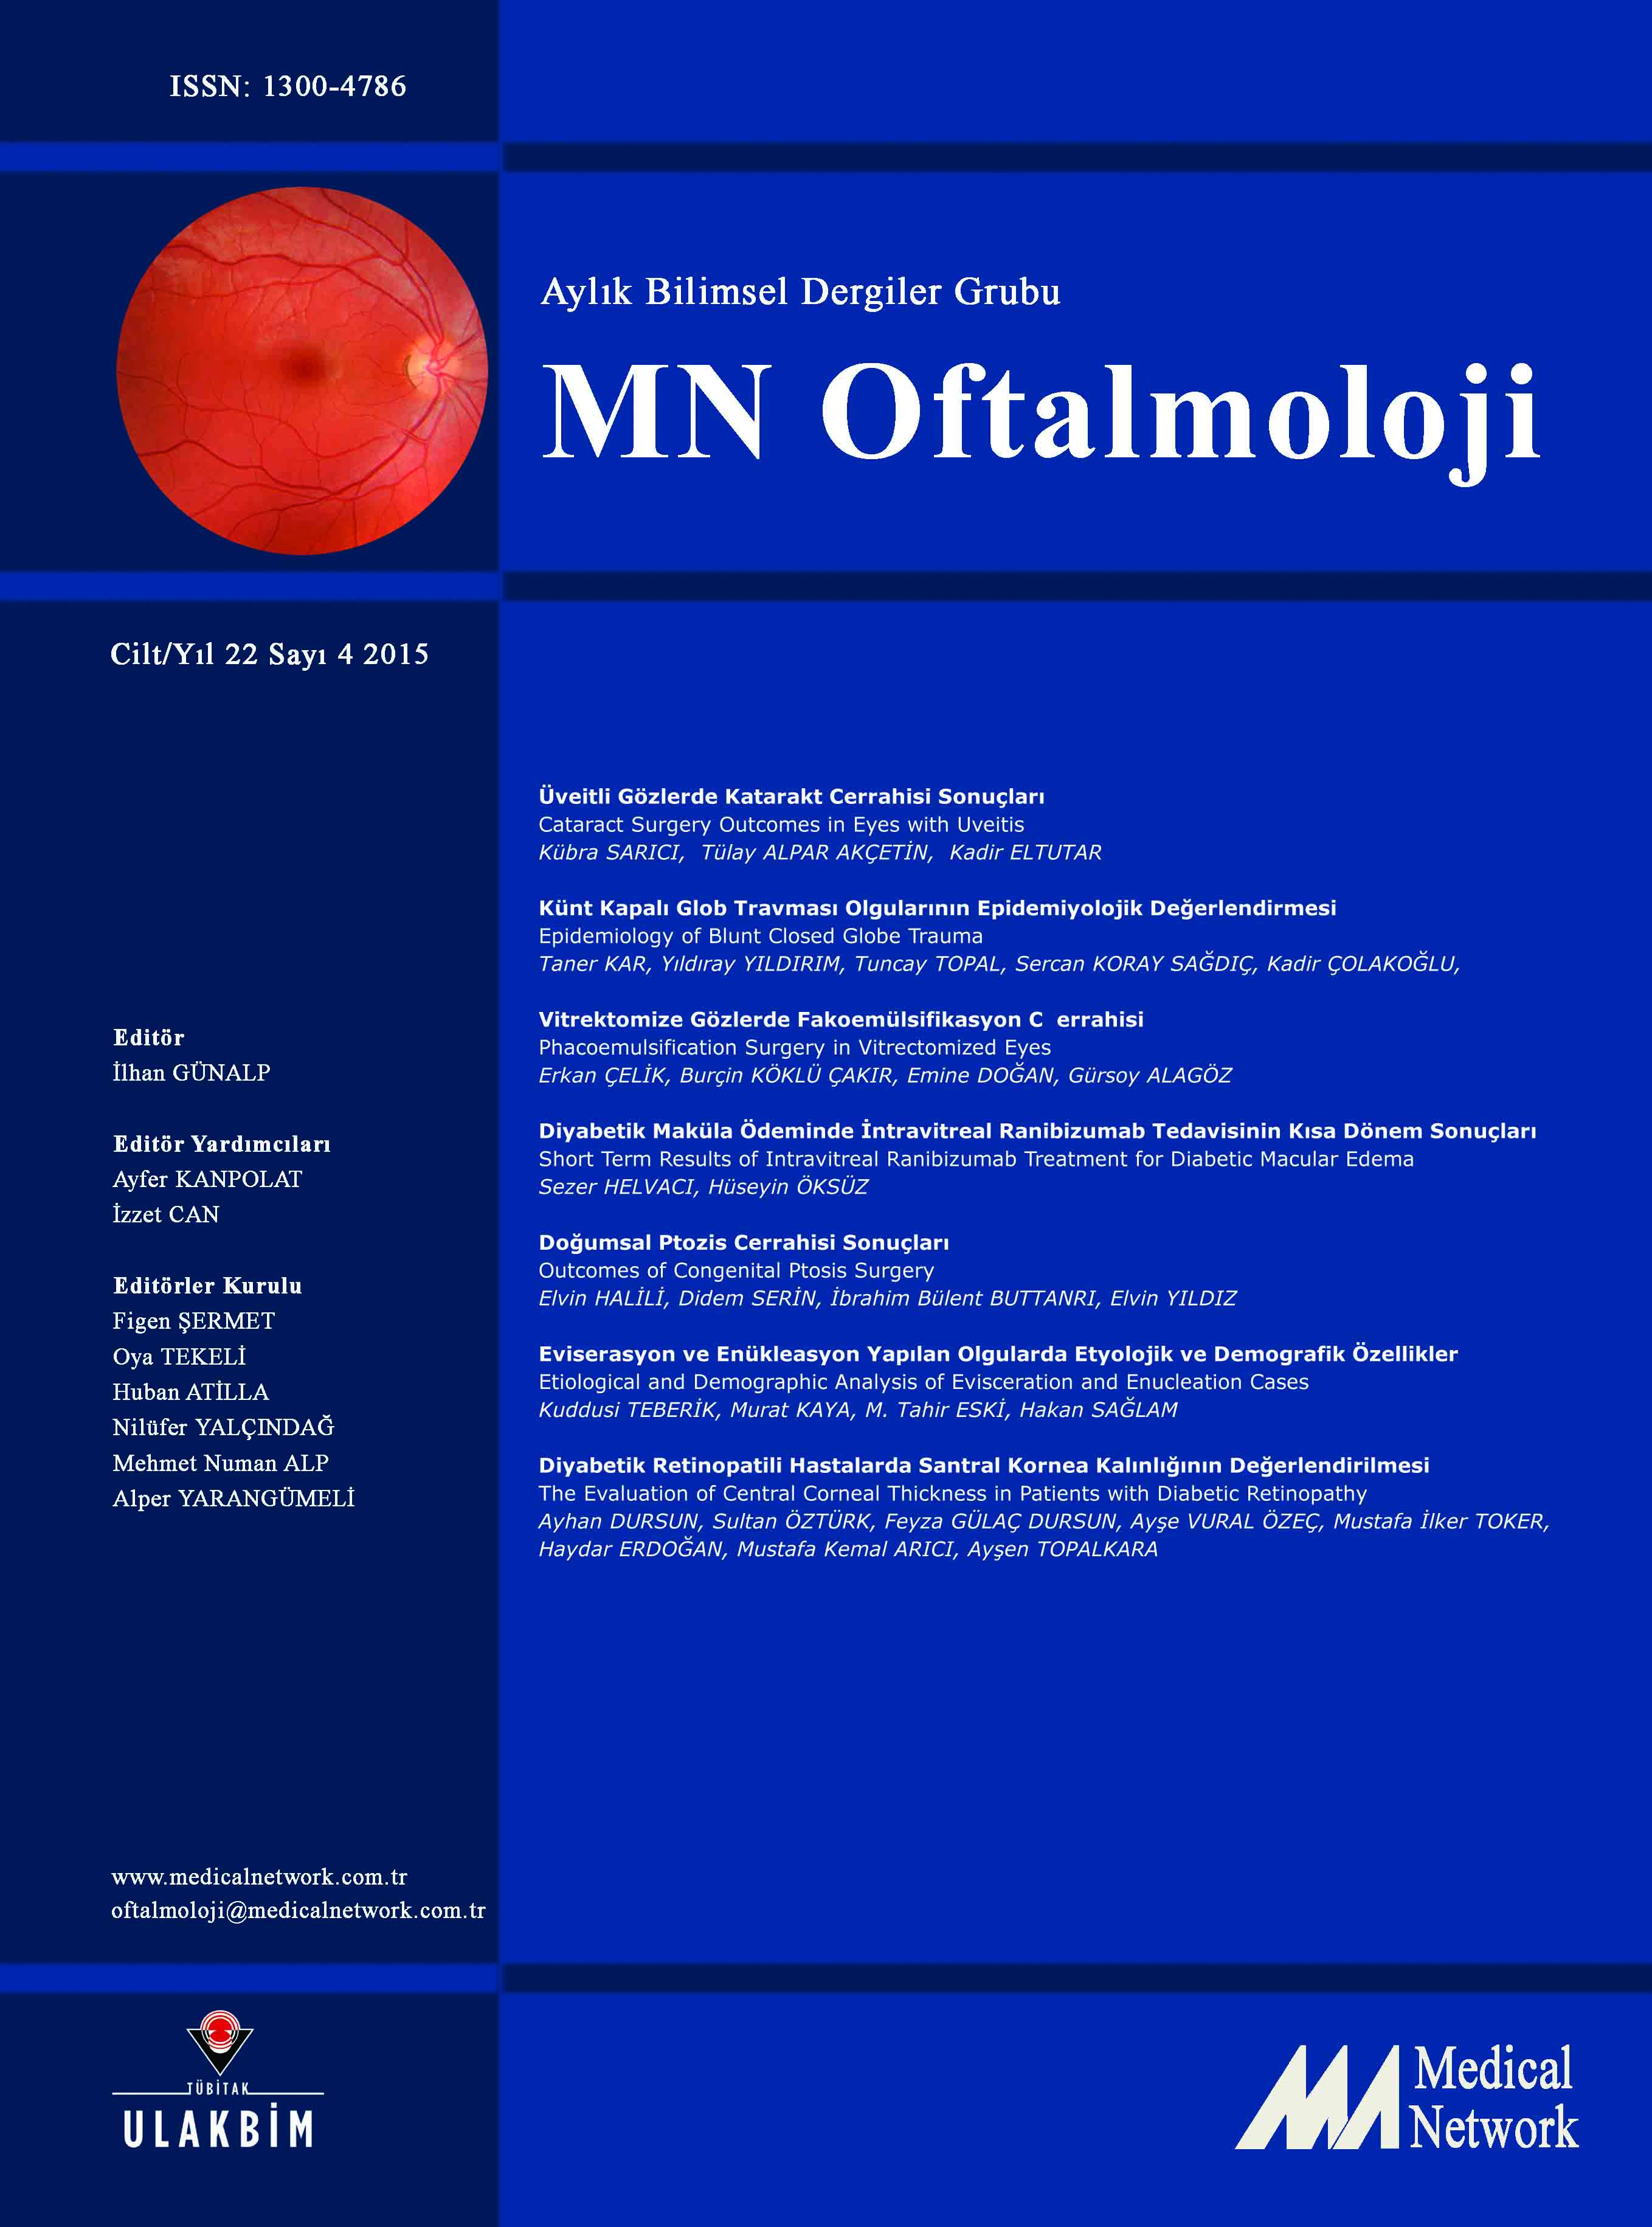 <p>MN Oftalmoloji Cilt: 22 Say: 4 2015 (MN Ophthalmology Volume: 22 No 4 2015)</p>